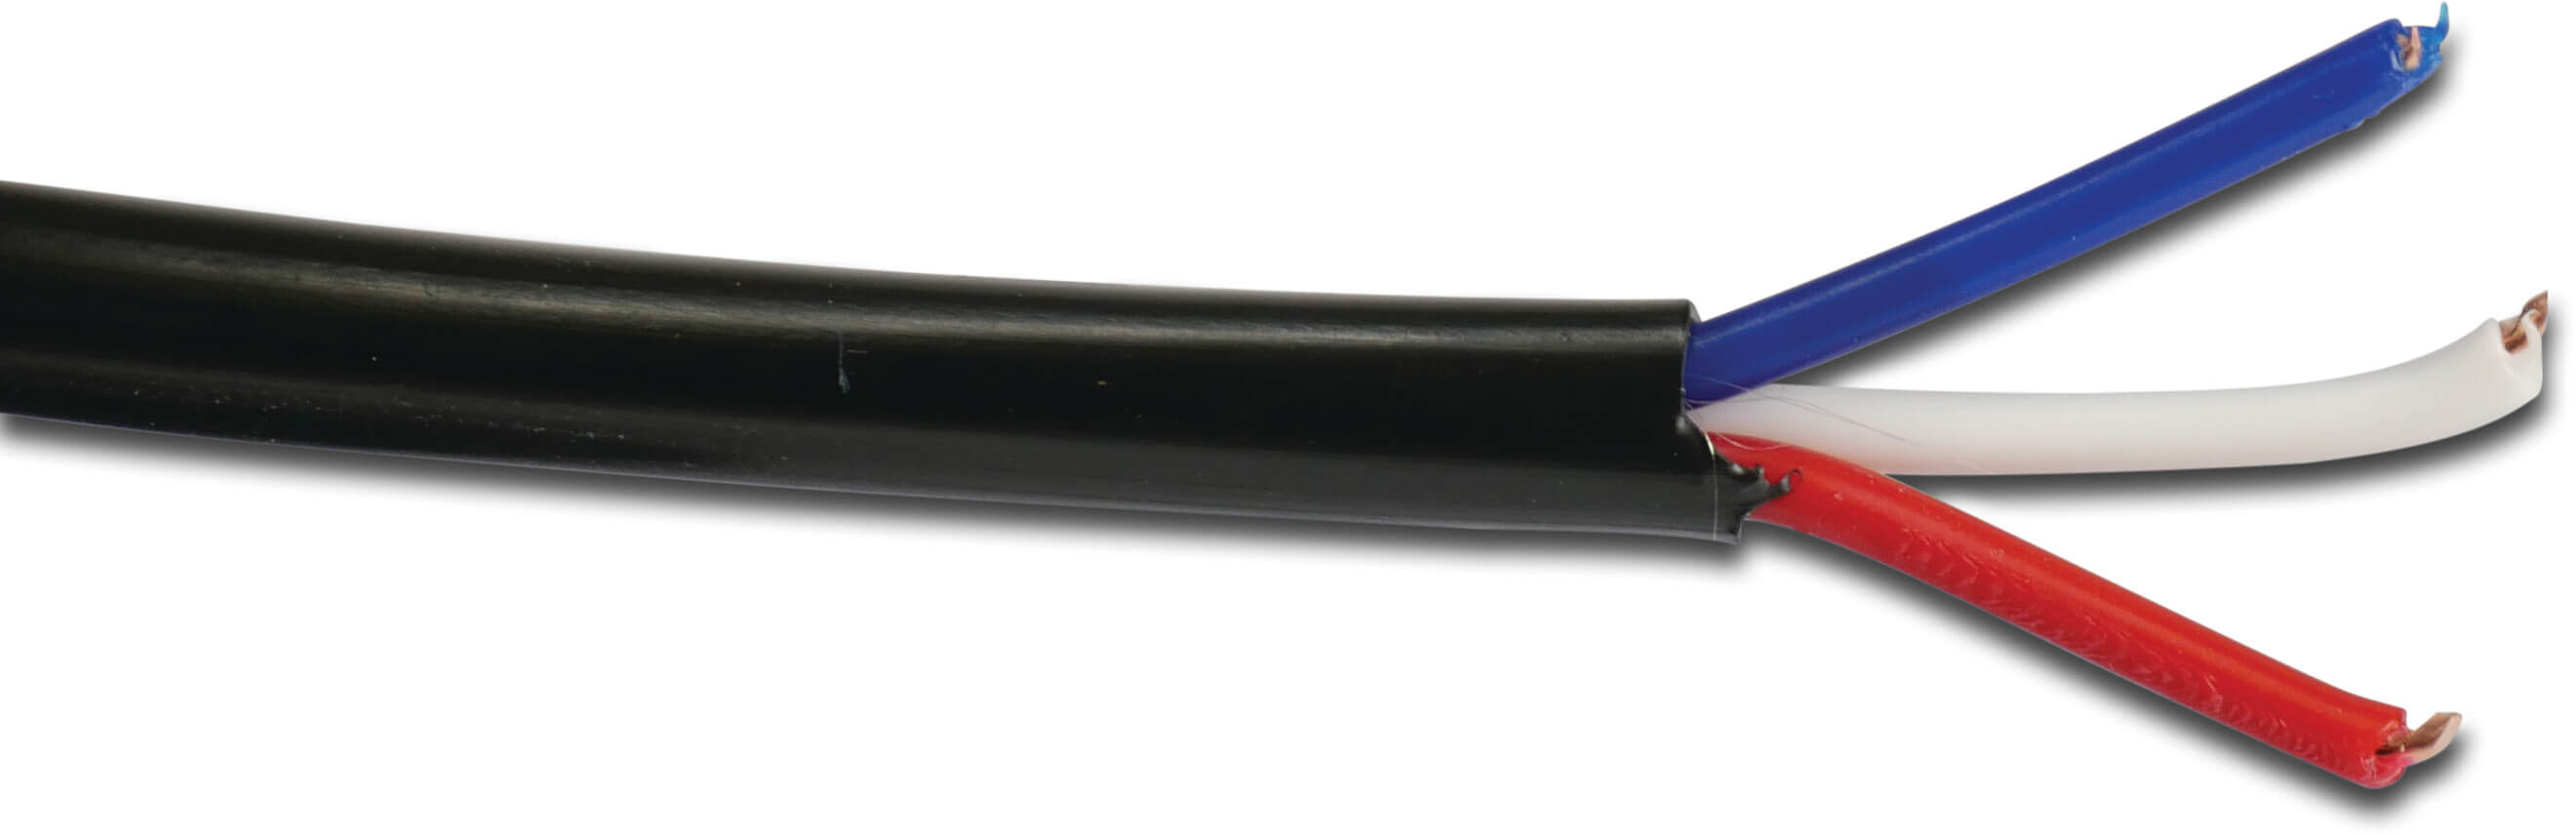 Stromkabel Grau 100m type 12 x 0,8mm² 12 farbig kodierte Adern